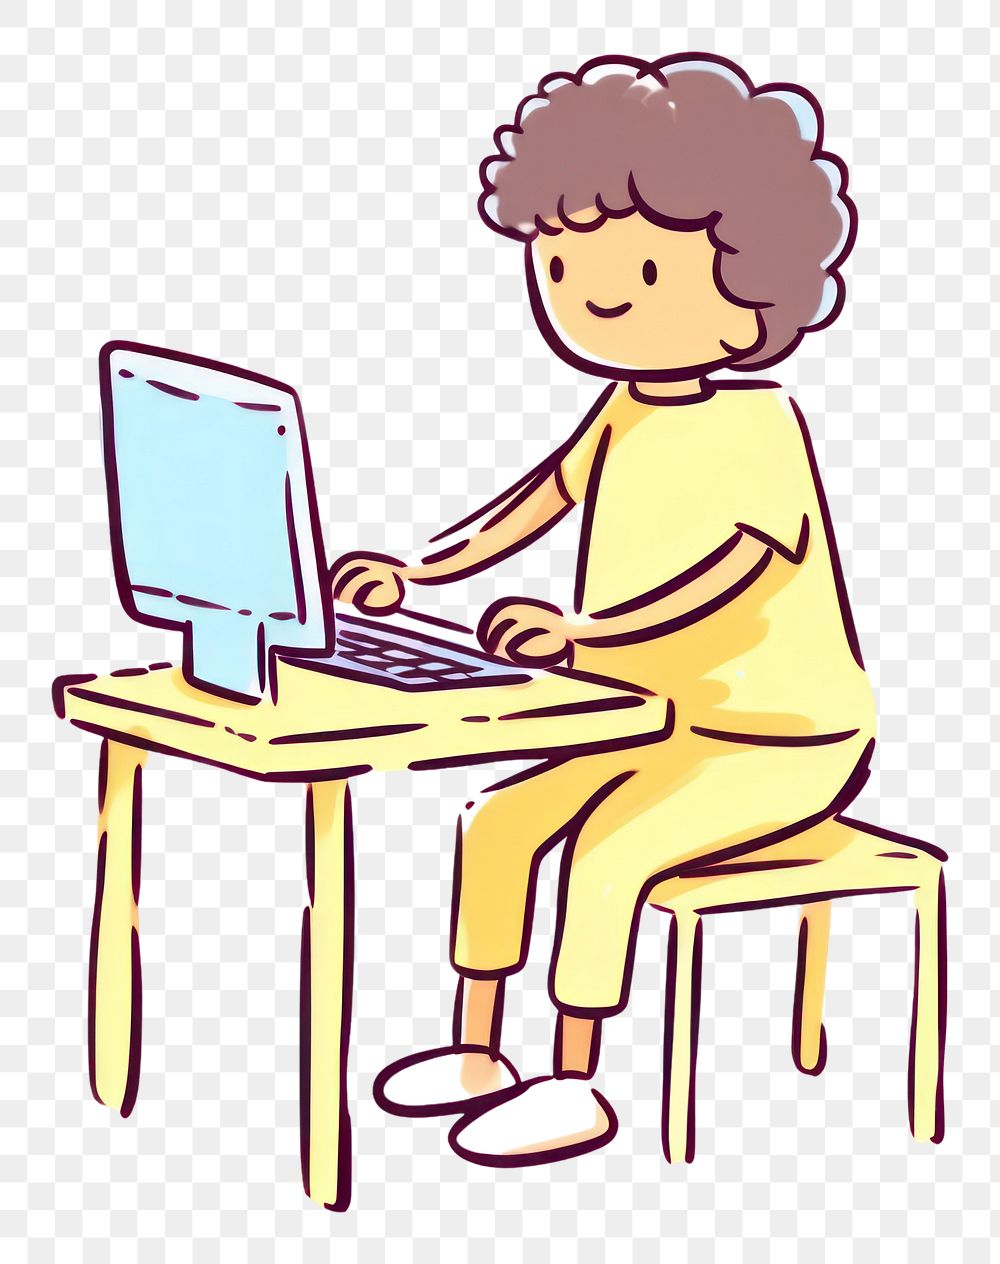 PNG Kid playing computer furniture sitting drawing.